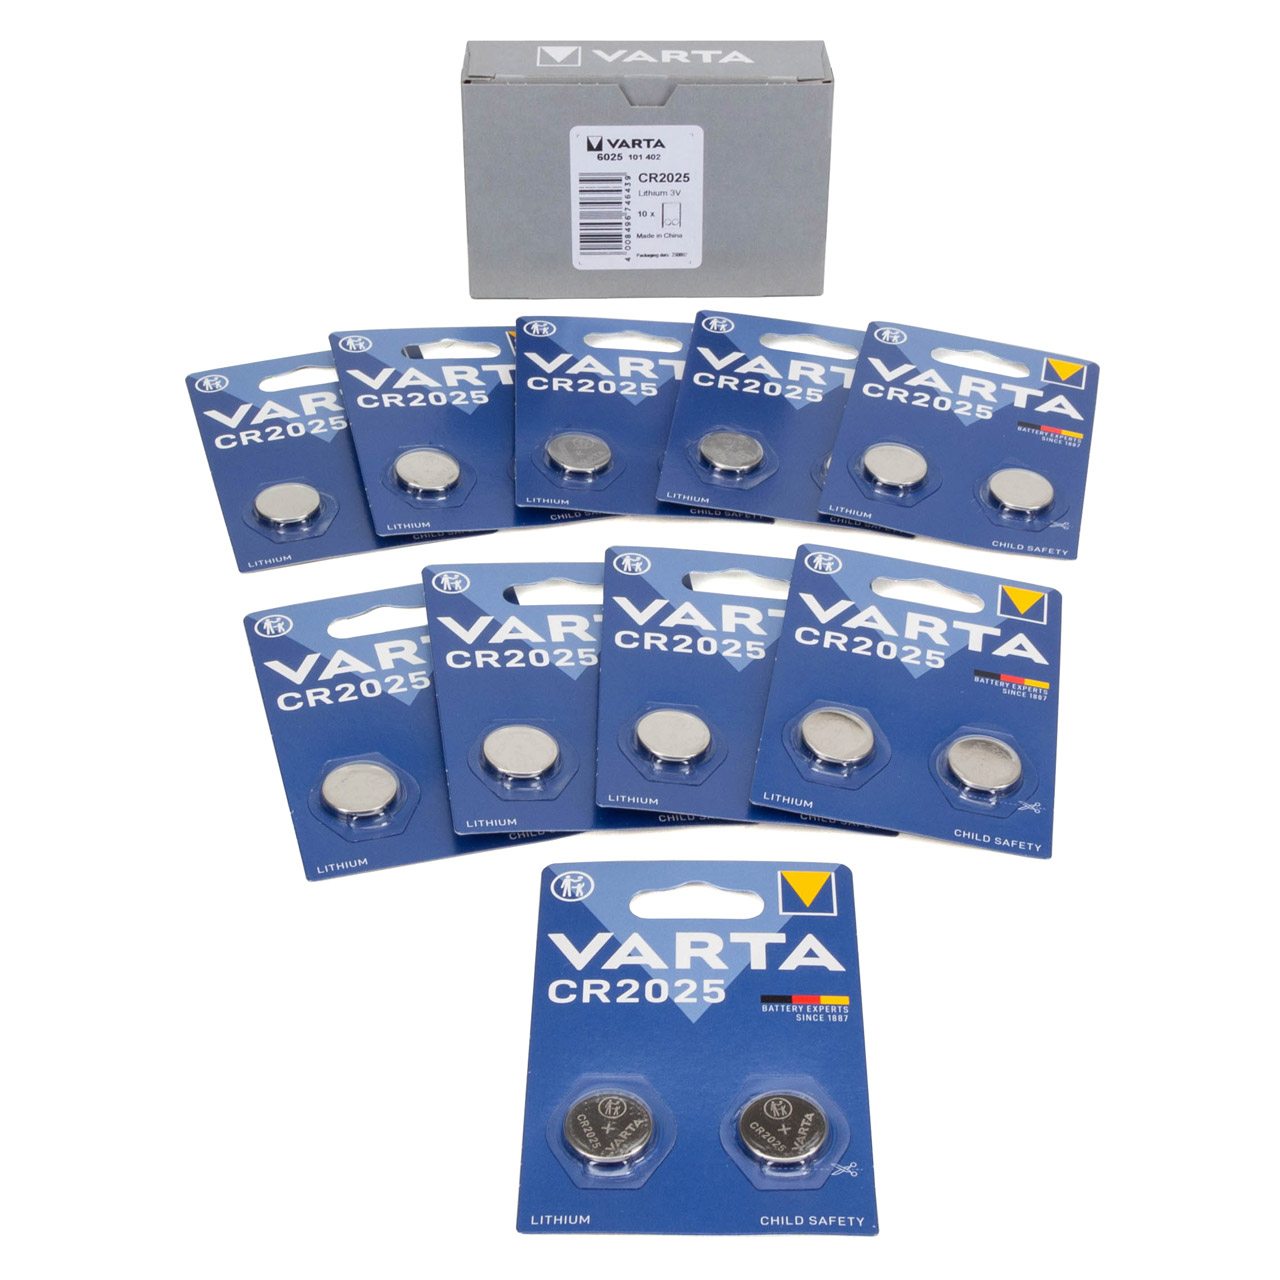 VARTA Batterien / Knopfzellen - 06032101401 